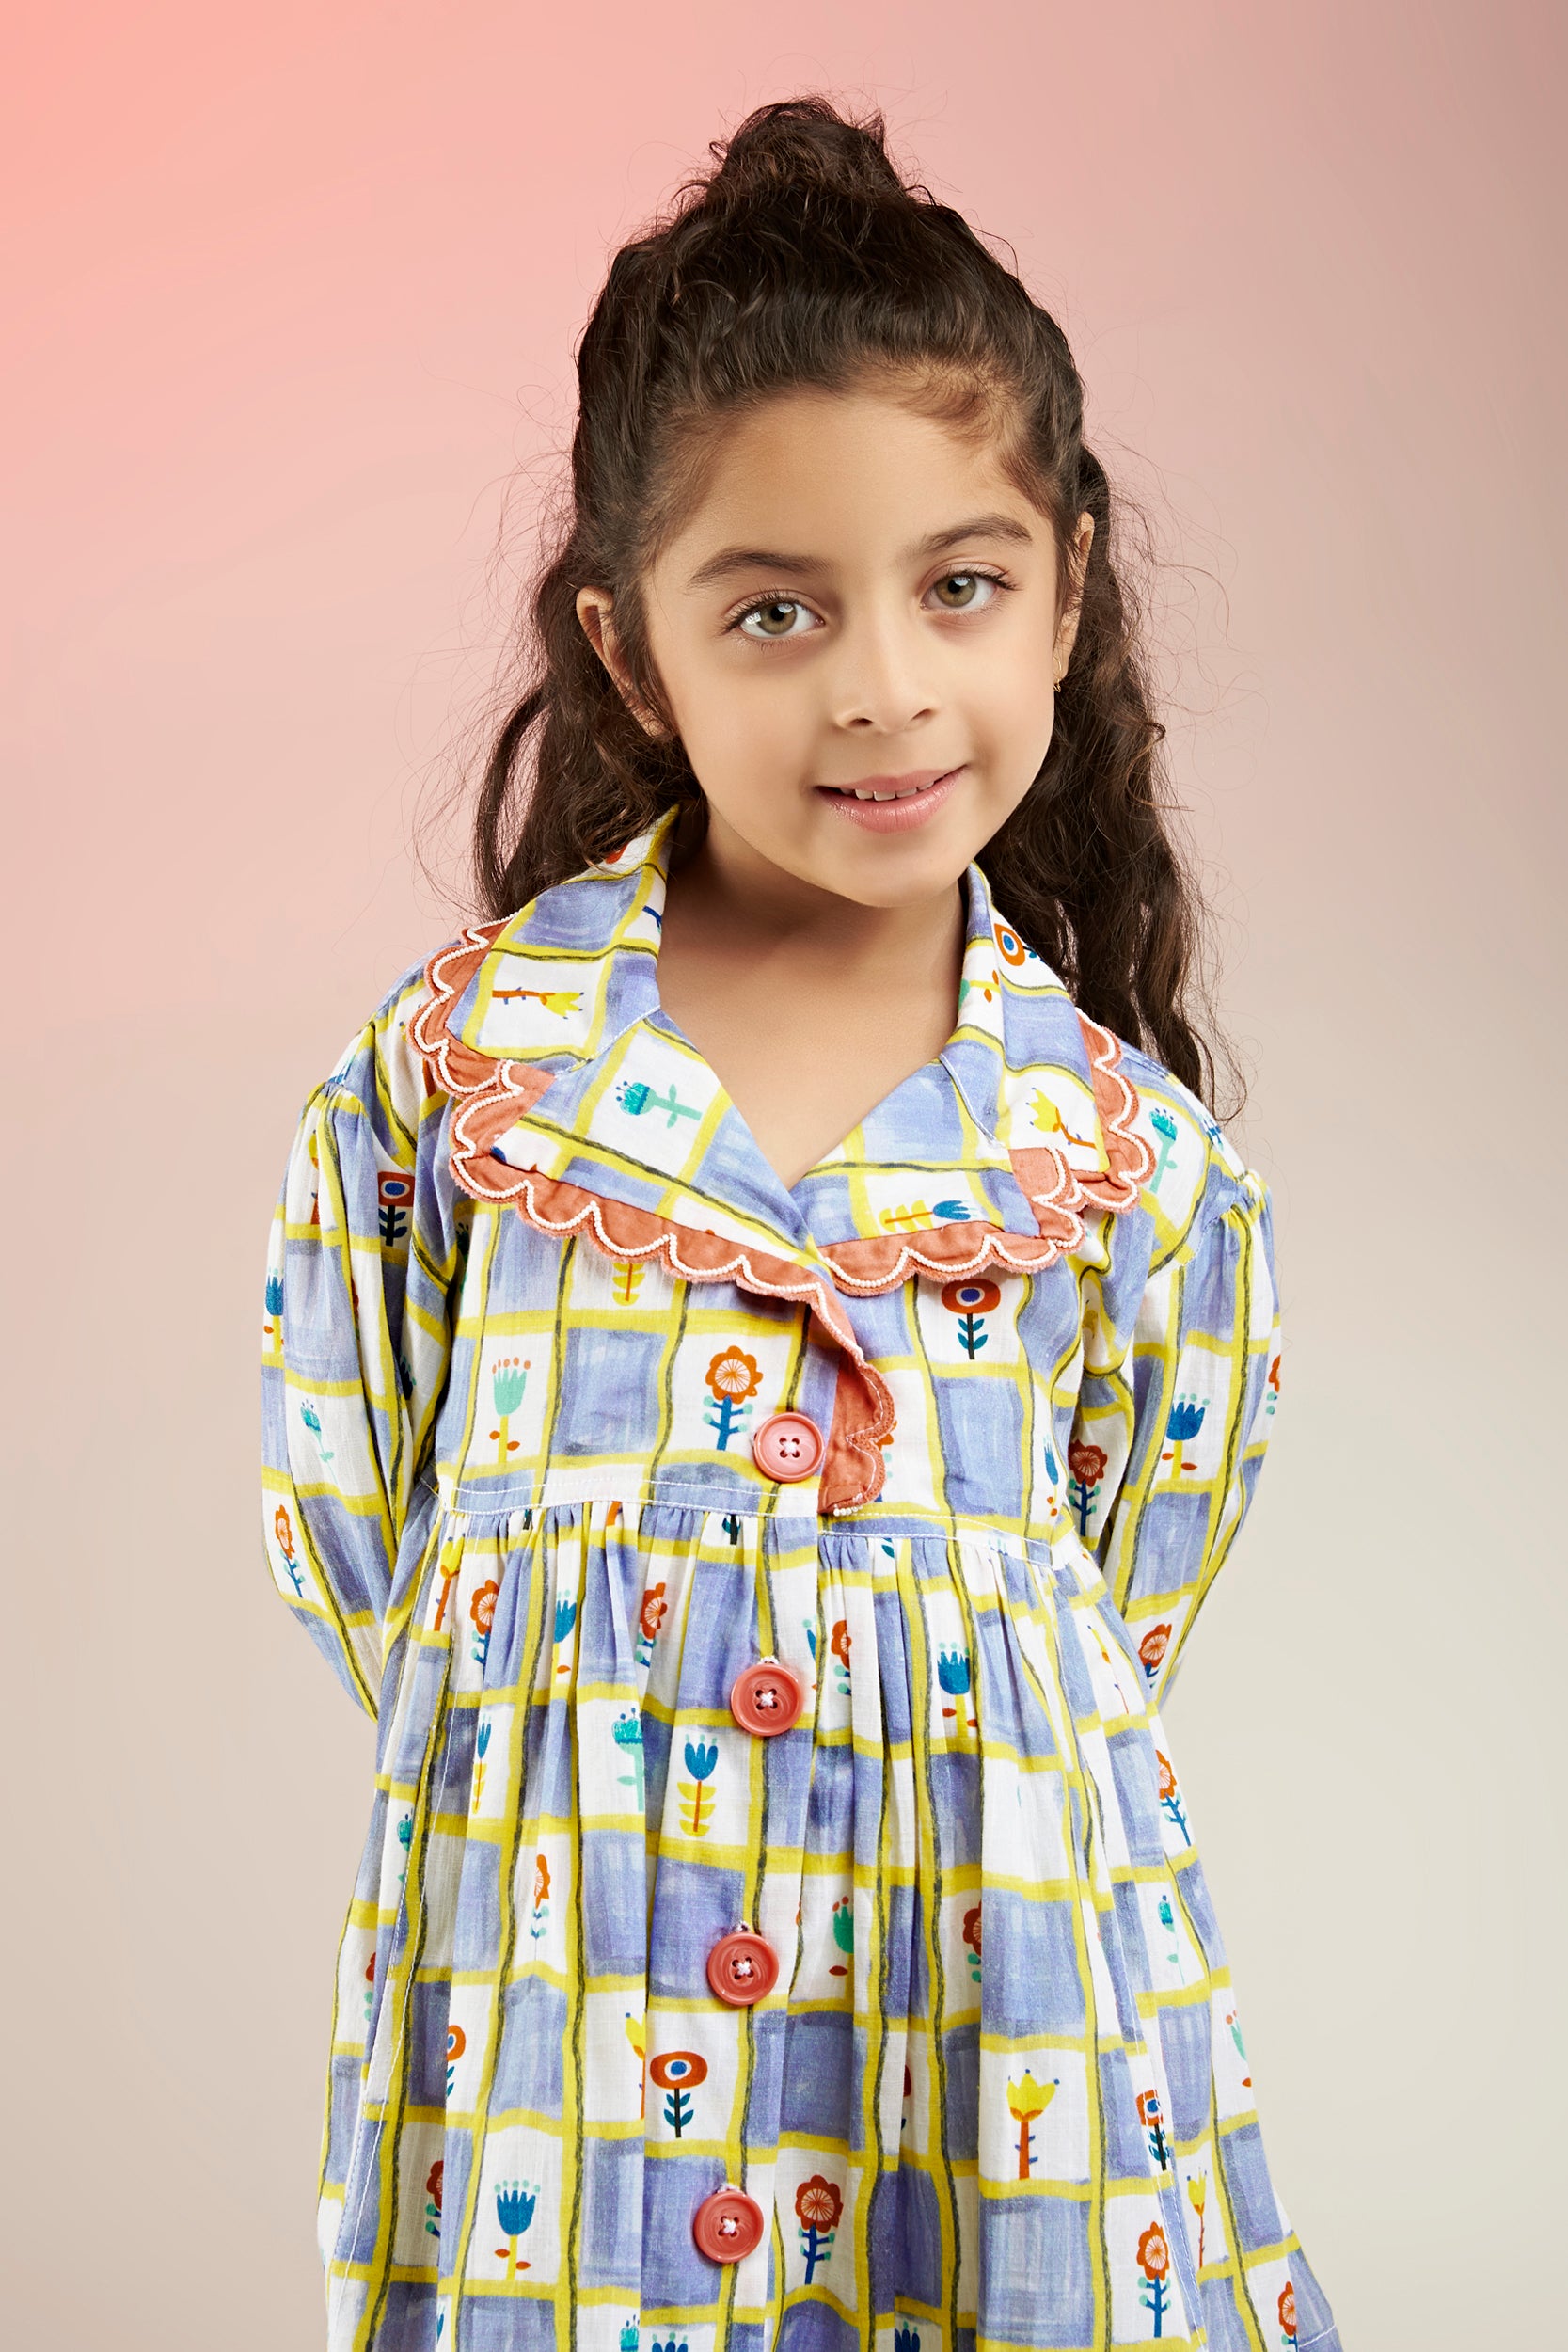 Stylish dress with jacket style for kids girls